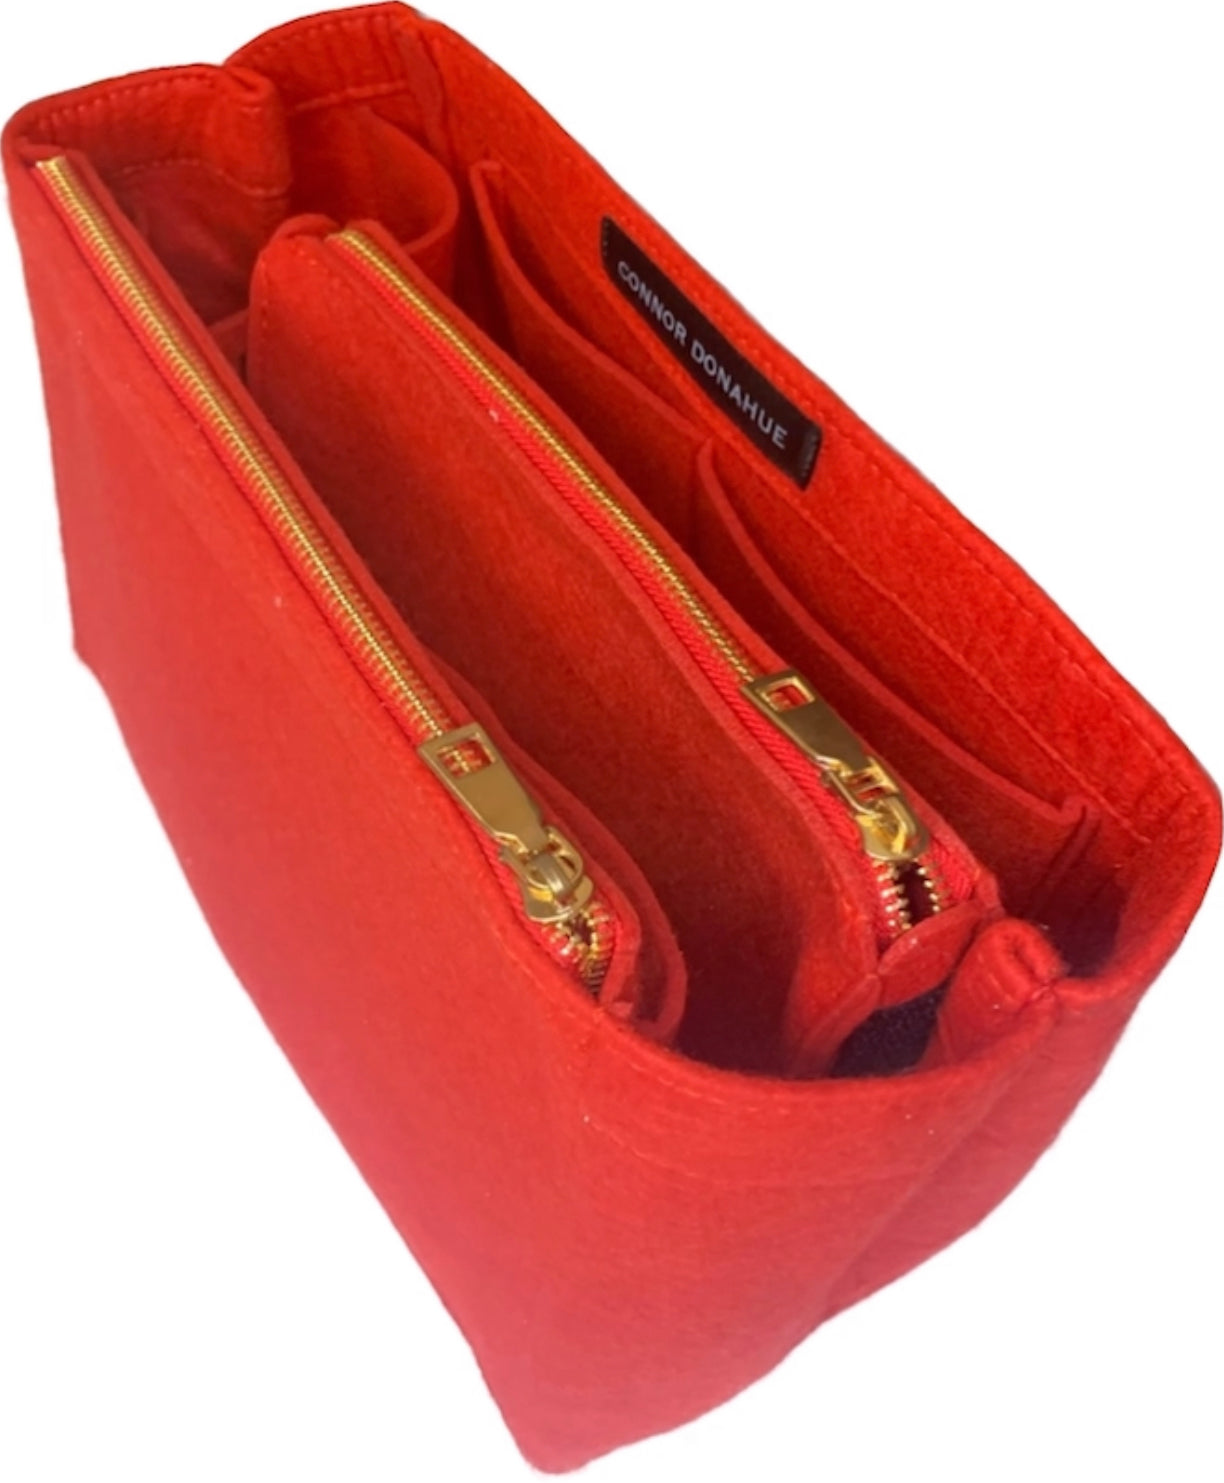 Bag Insert Organizer (Rouge)